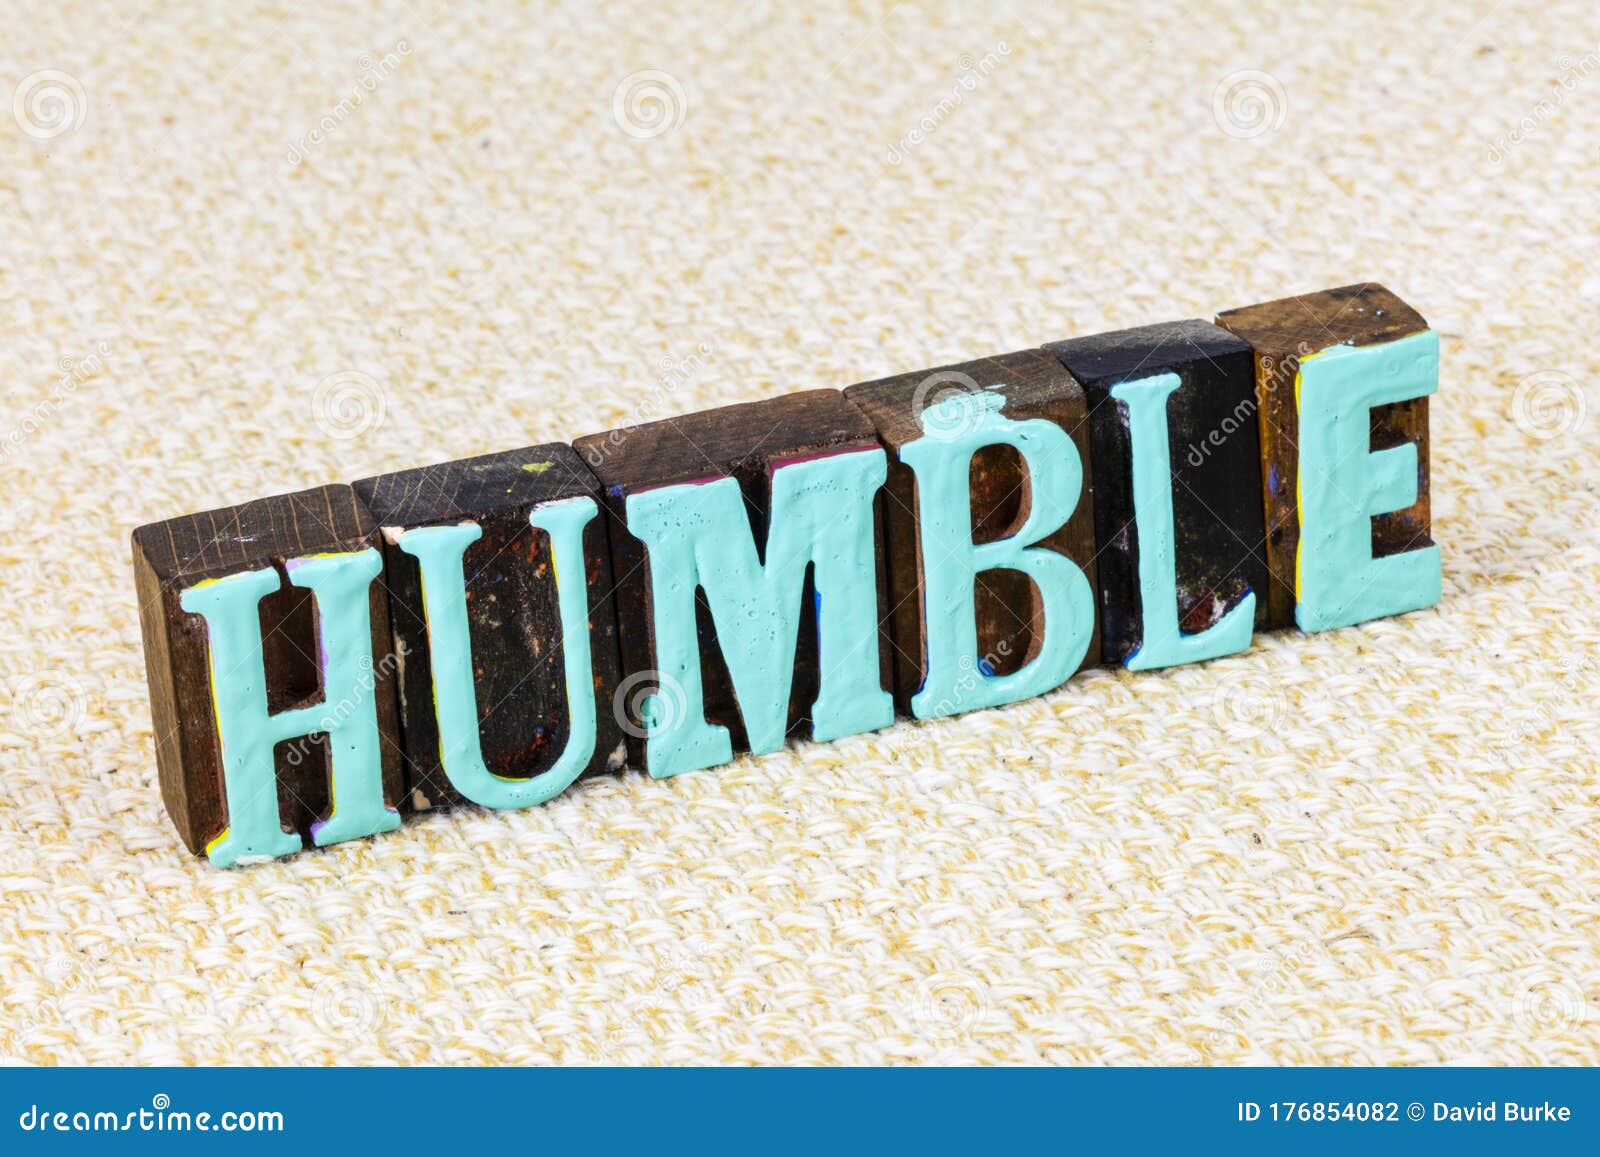 humble kind faith quiet help people honest grateful kindness